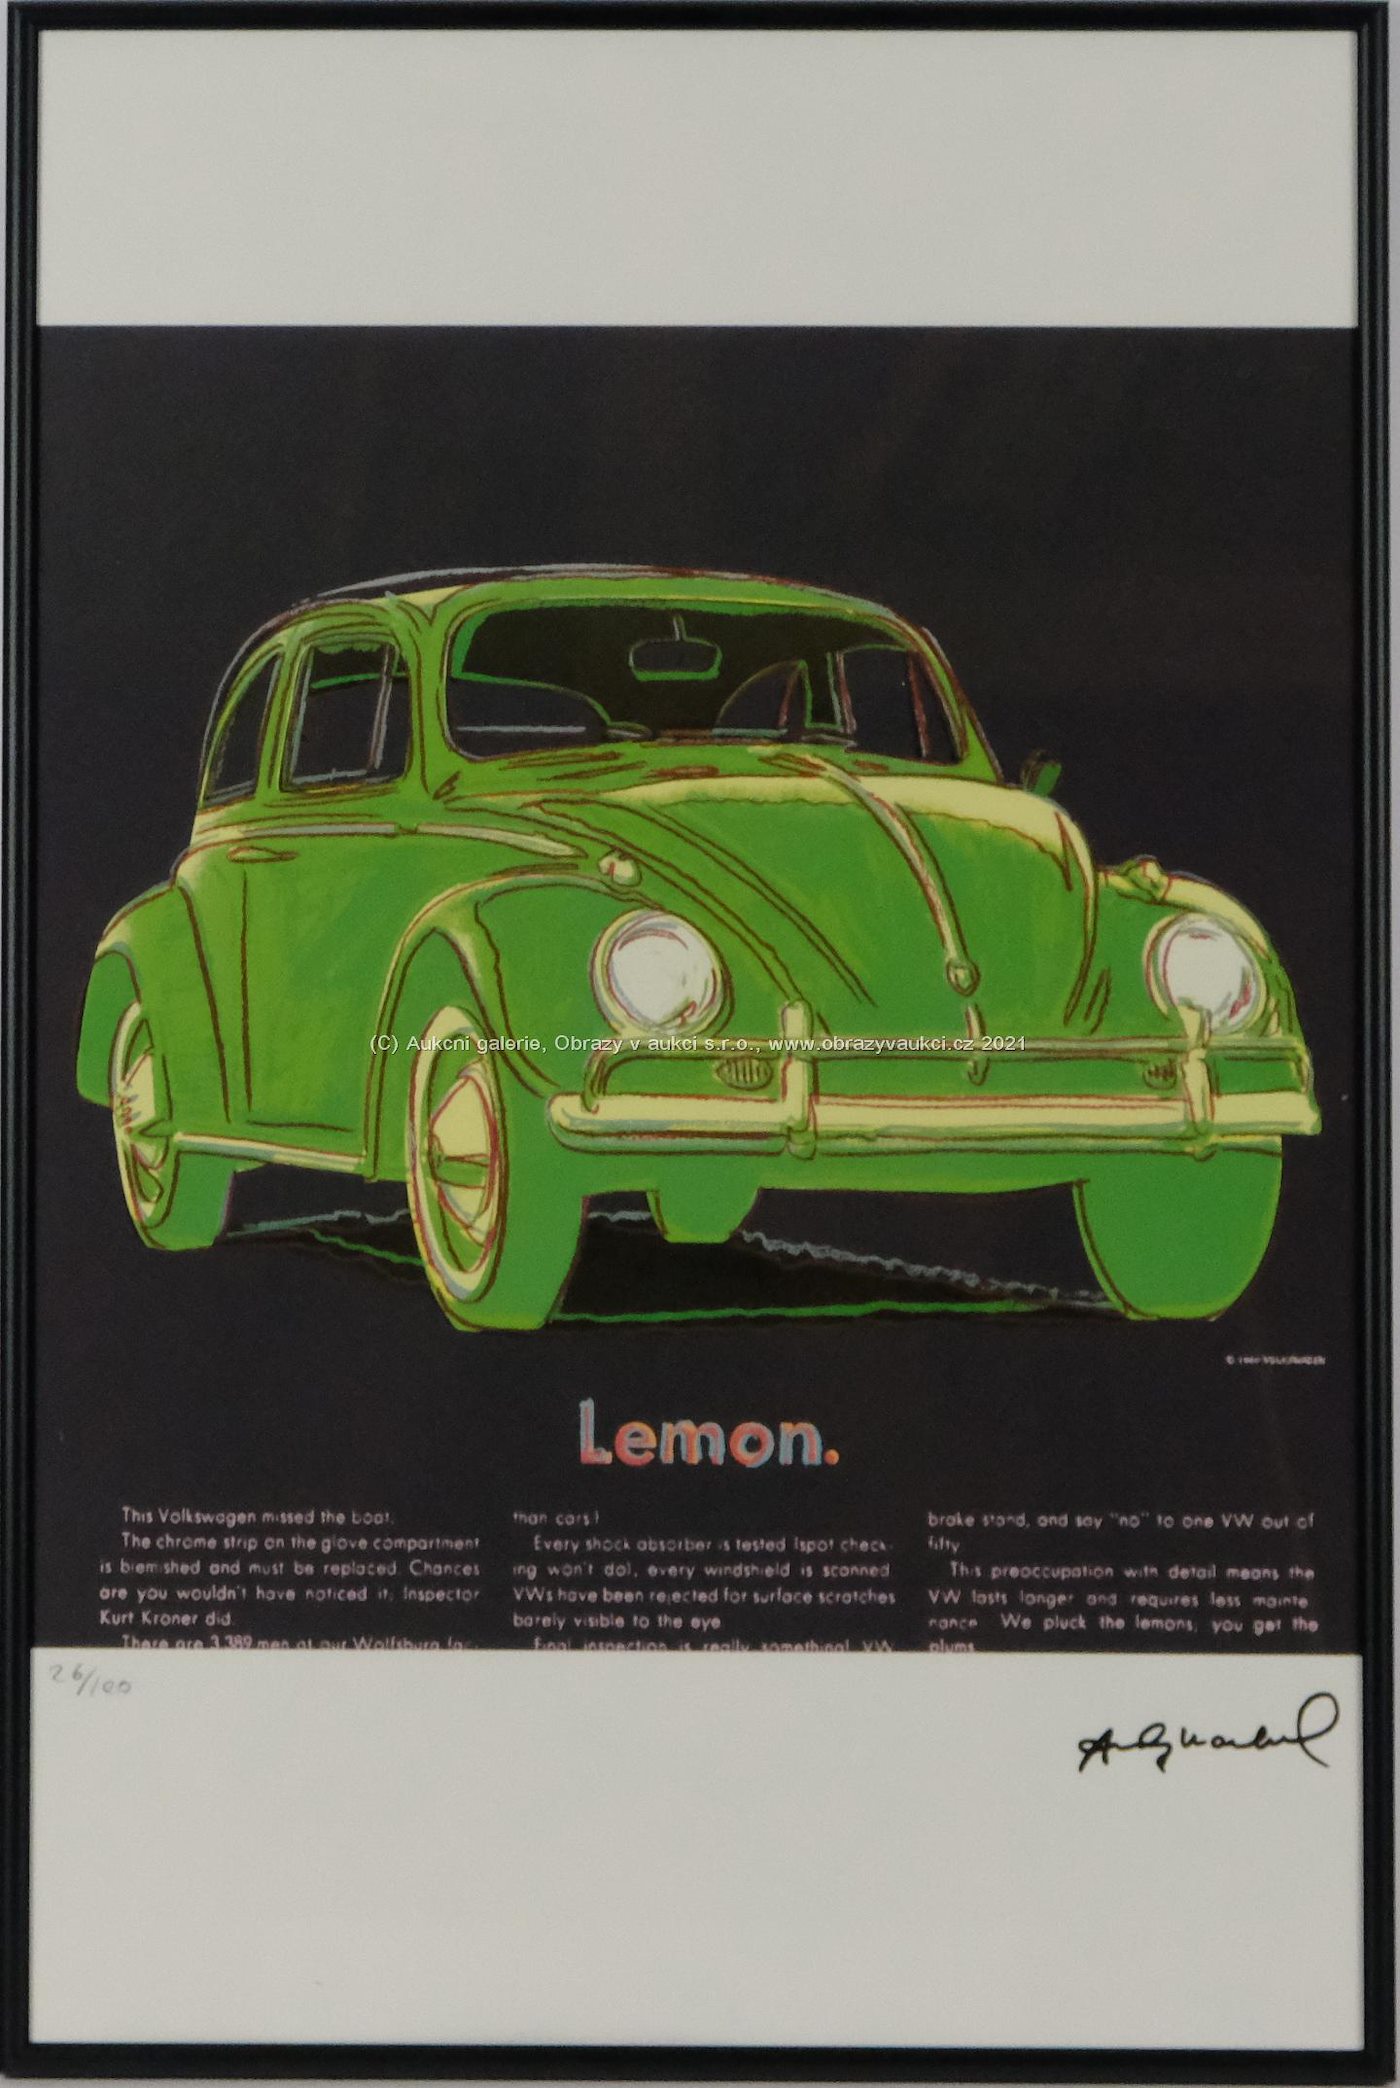 Andy Warhol - Lemon